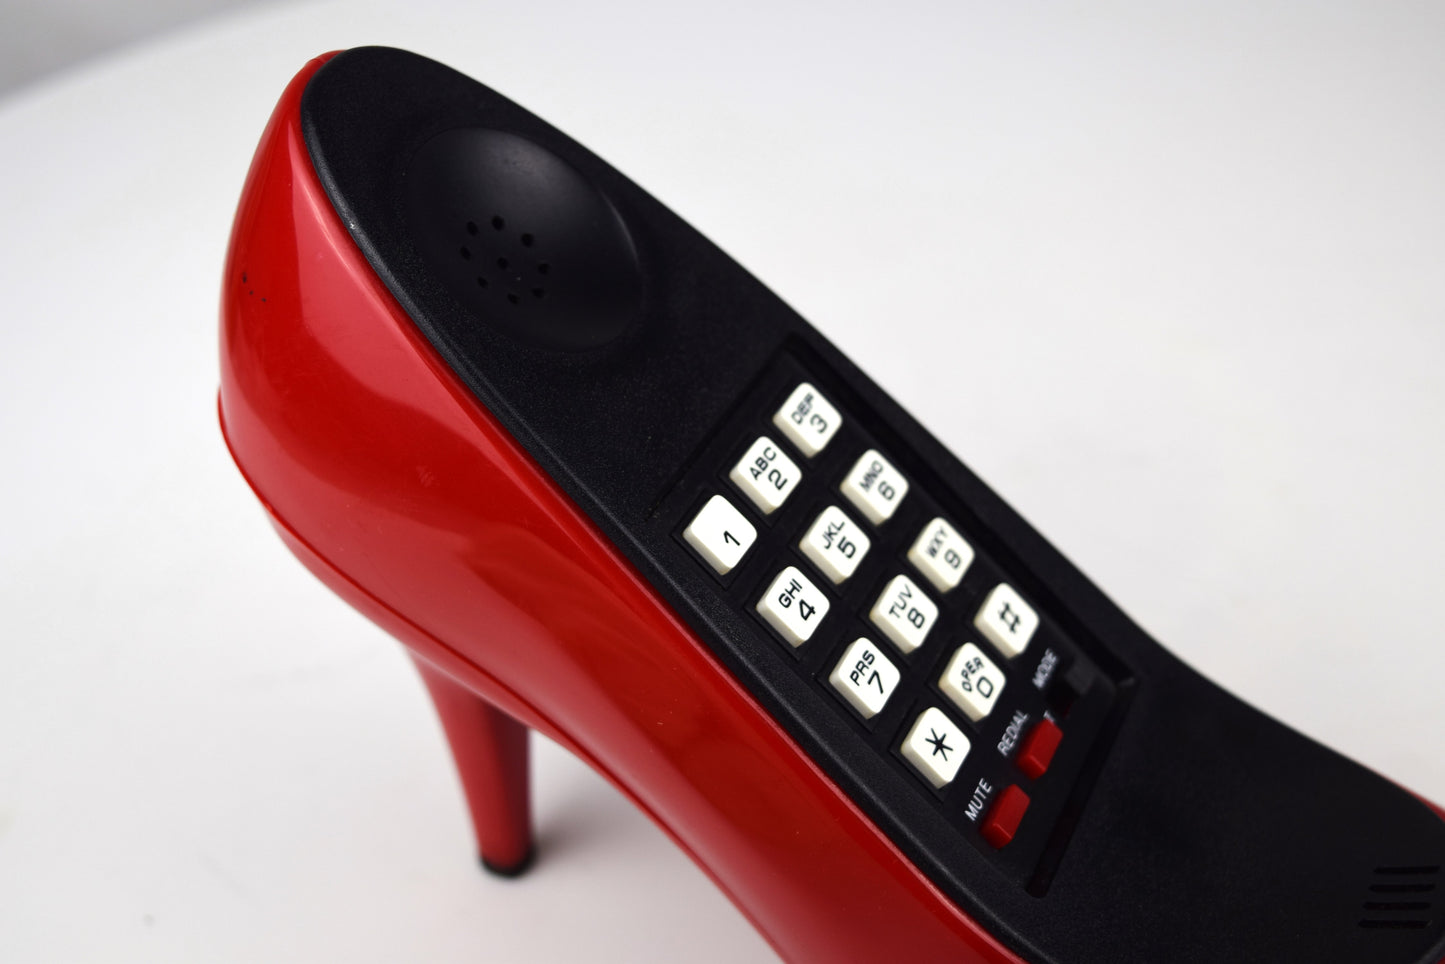 Red High Heel Shoe Telephone